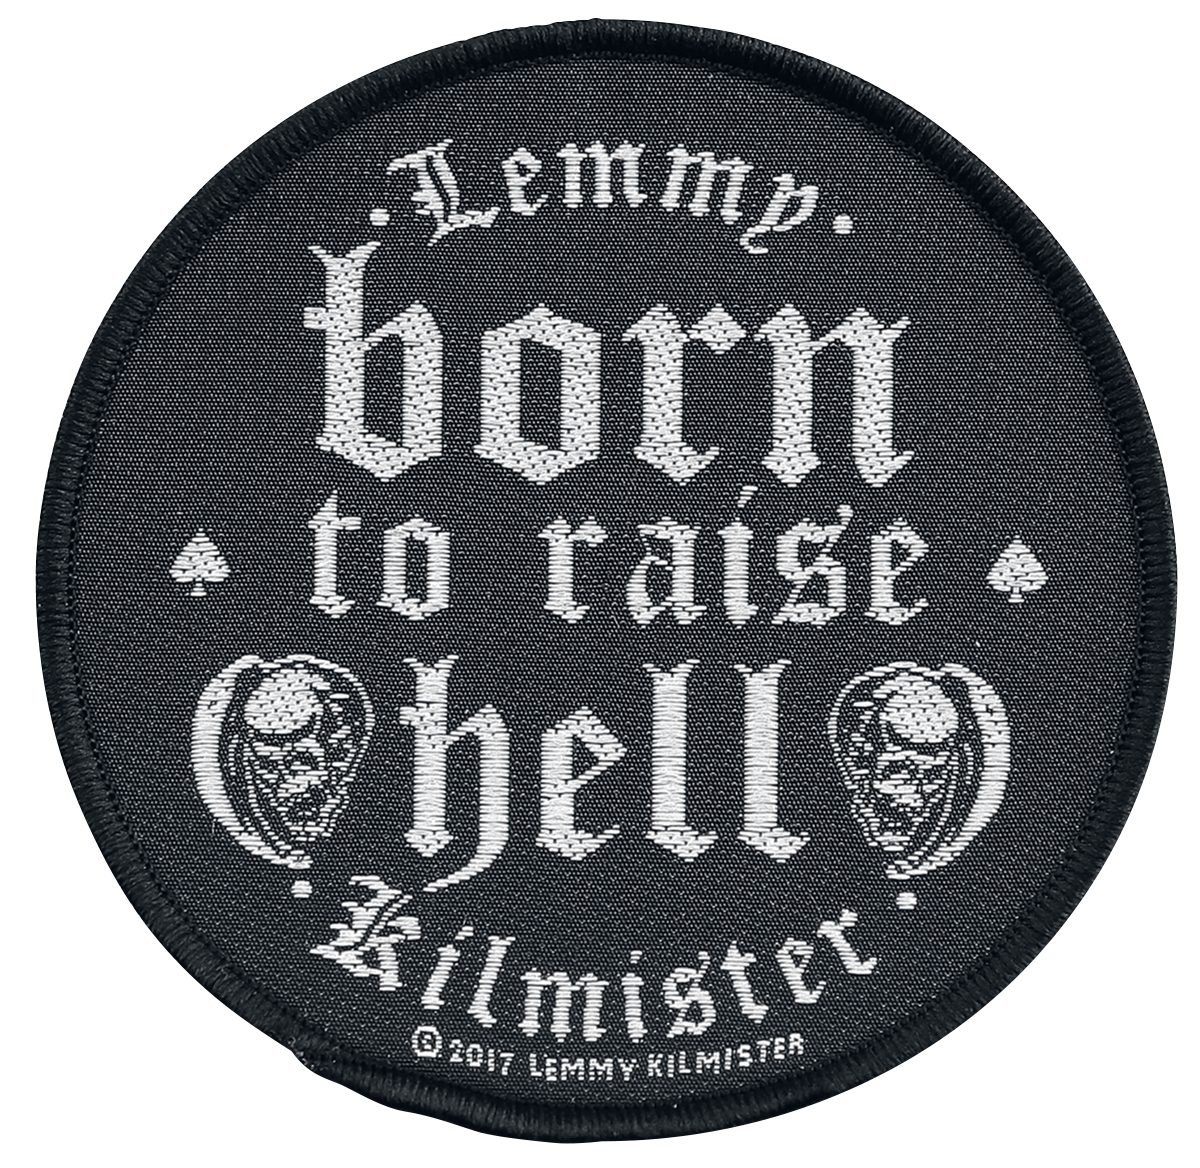 Motörhead - Lemmy Kilmister - Born to raise hell - Patch - schwarz| weiß